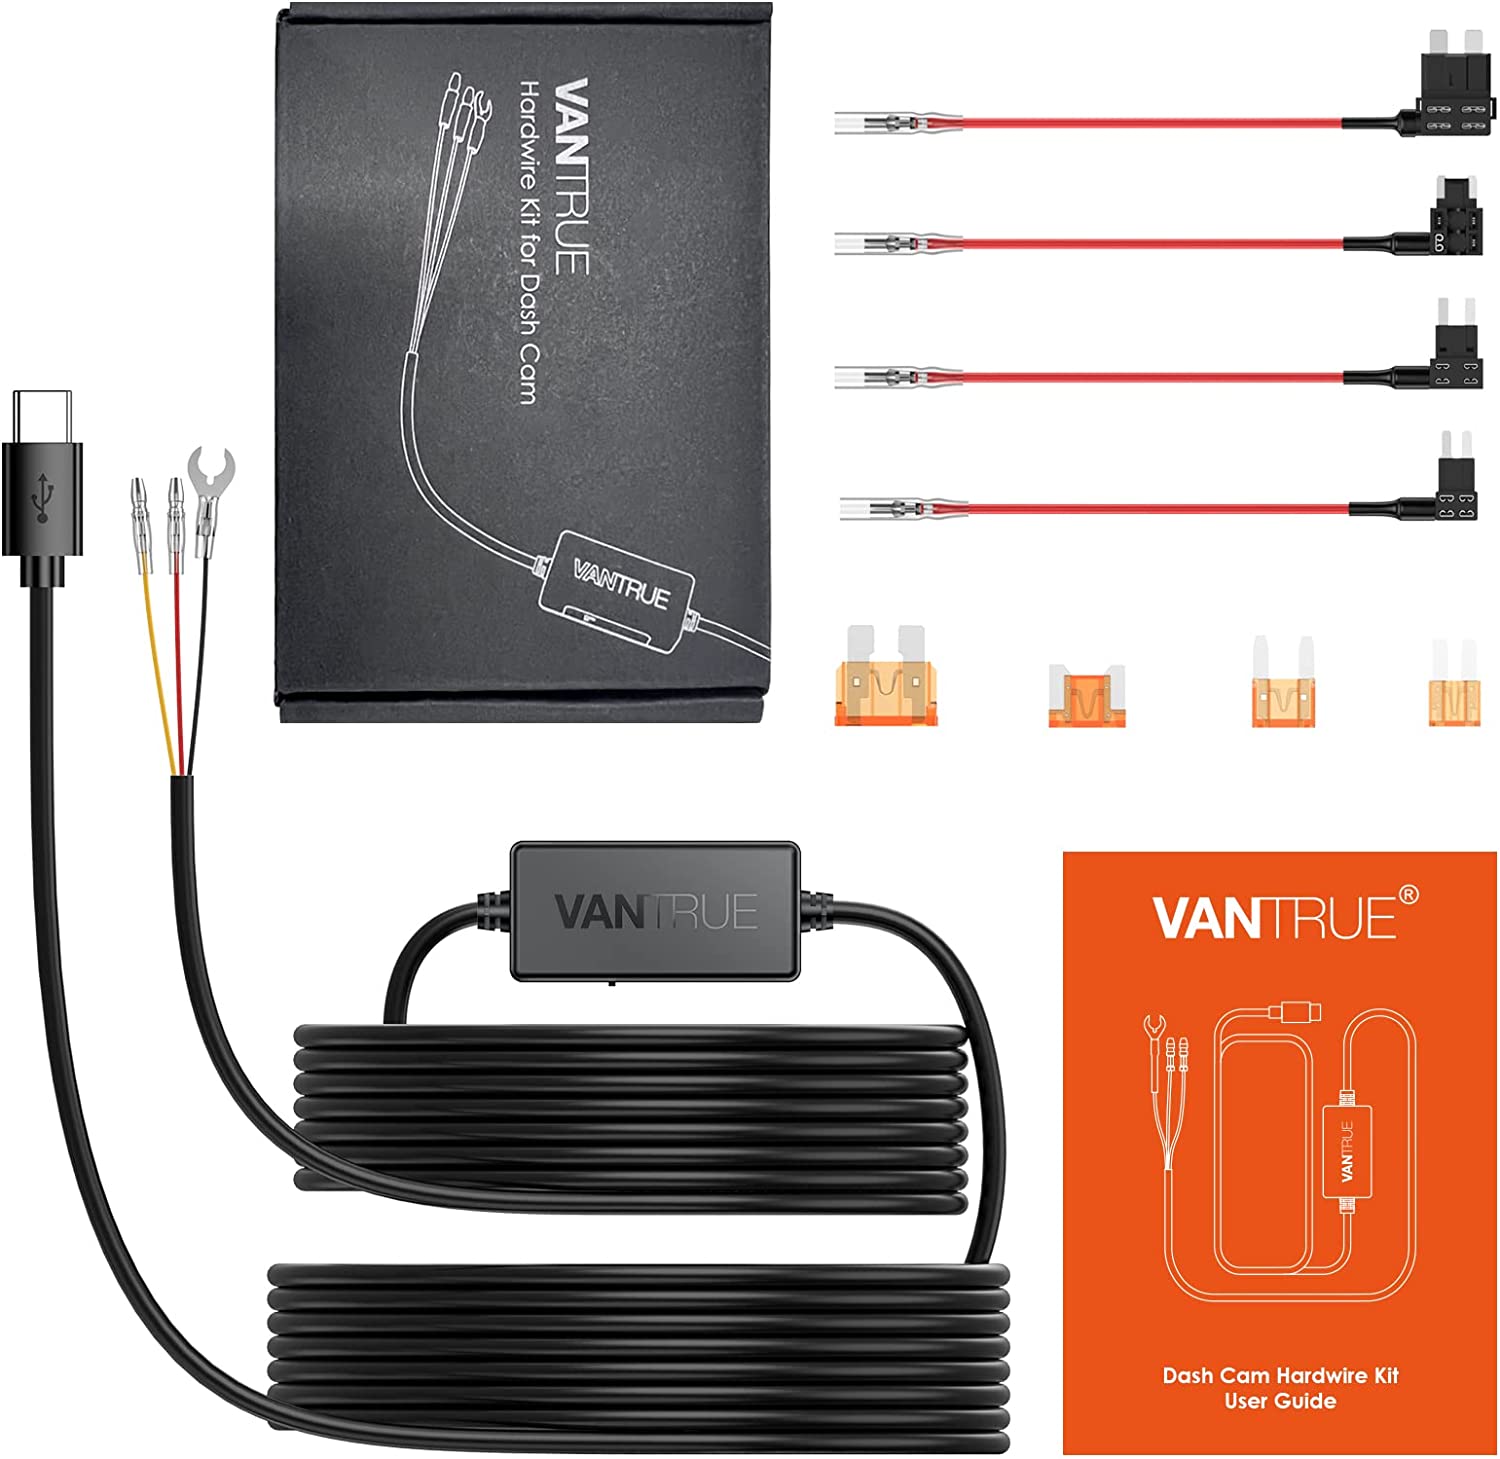 Vantrue USB C Dash Cam Hardwire Kit - 12V to 5V +Fuse Taps (N5,N4,N2 P